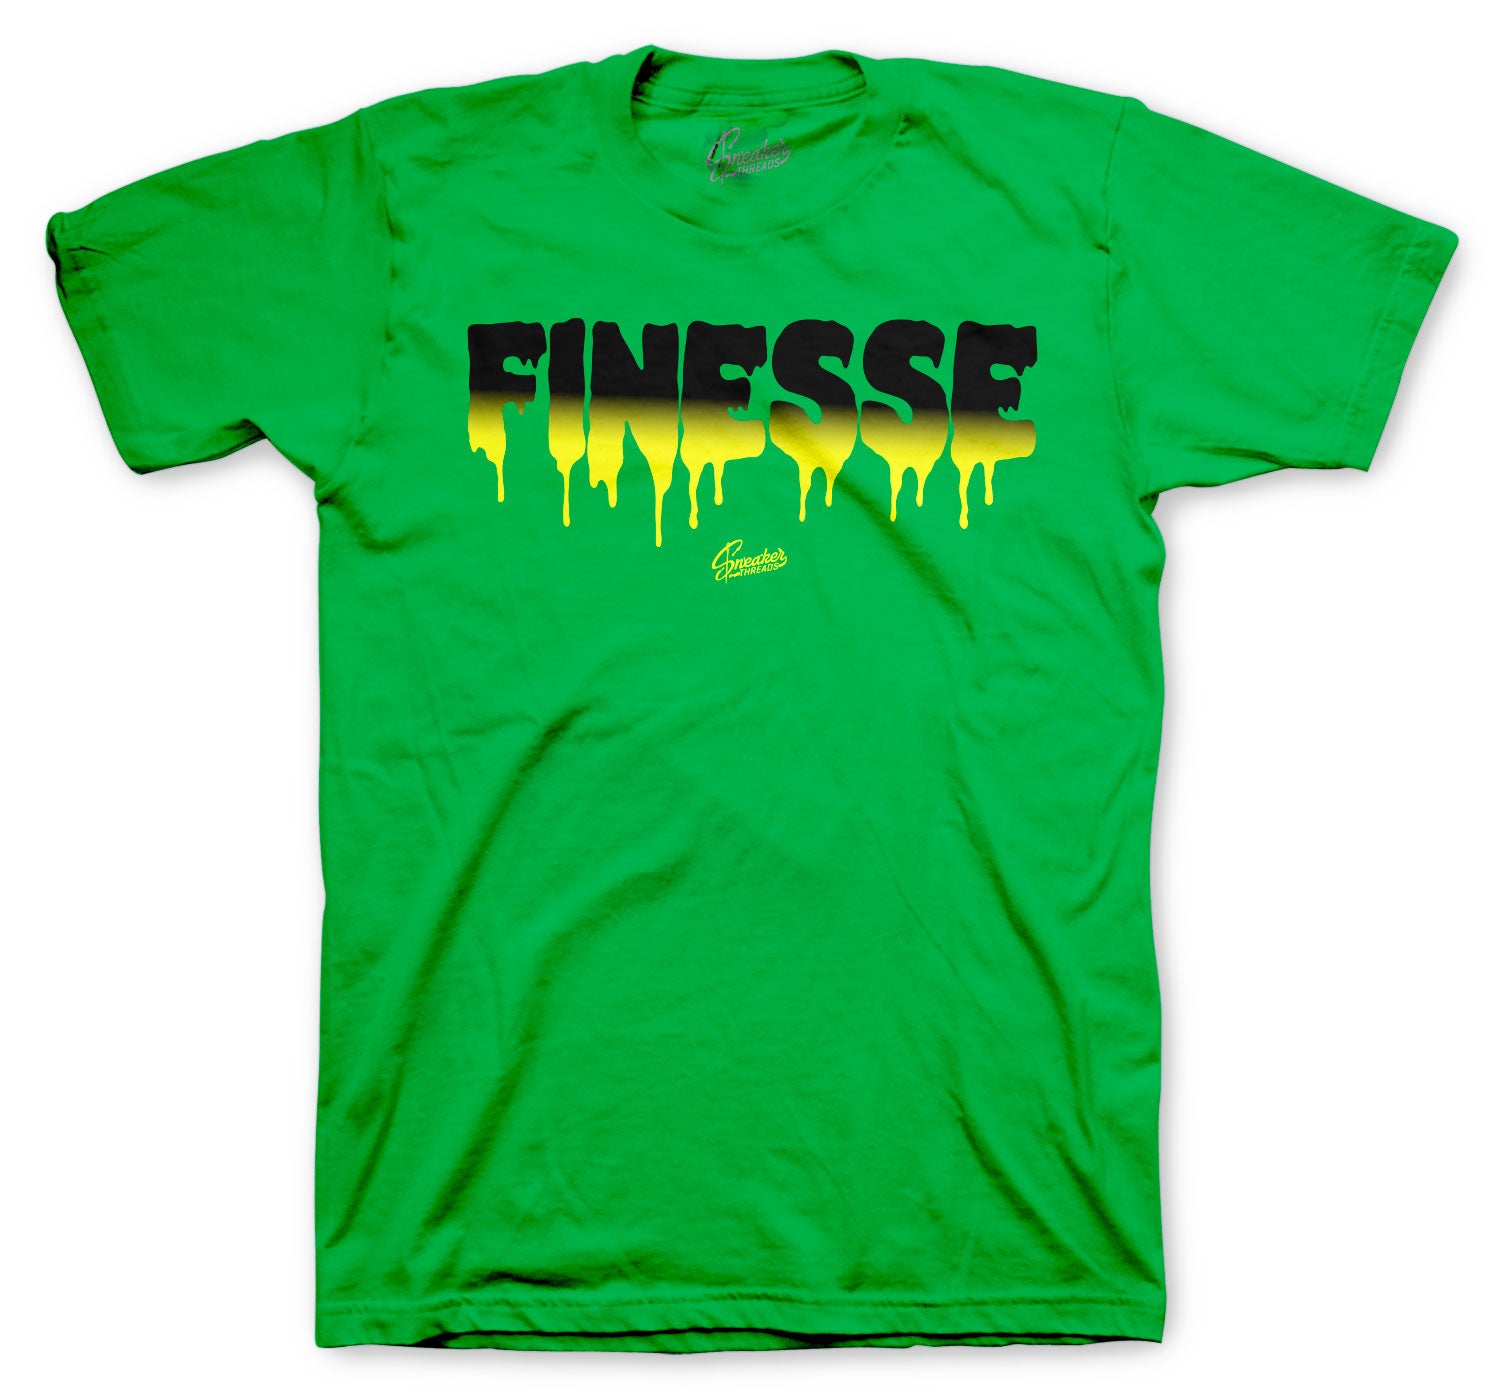 Retro 5 Oregon Shirt - Finesse - Green